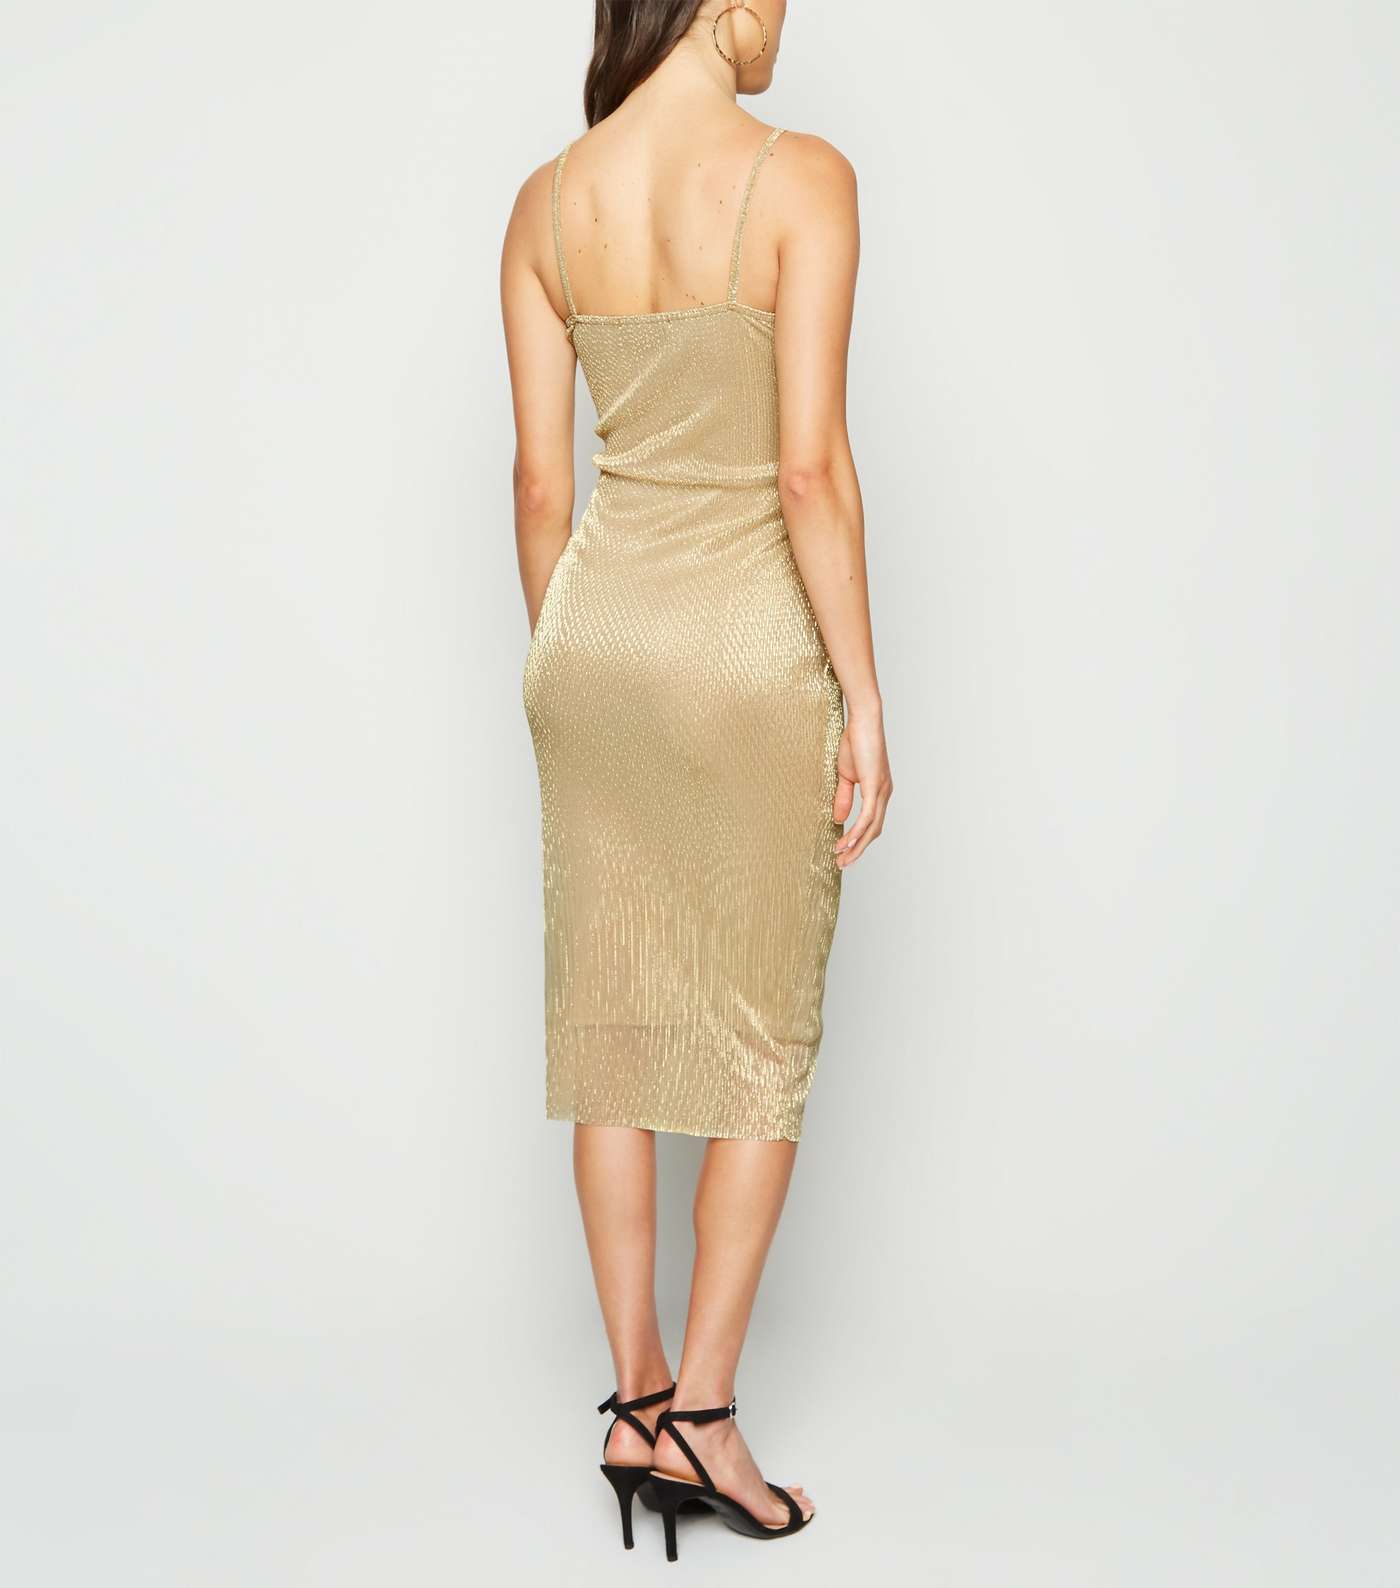 Cameo Rose Gold Metallic Twist Dress Image 2